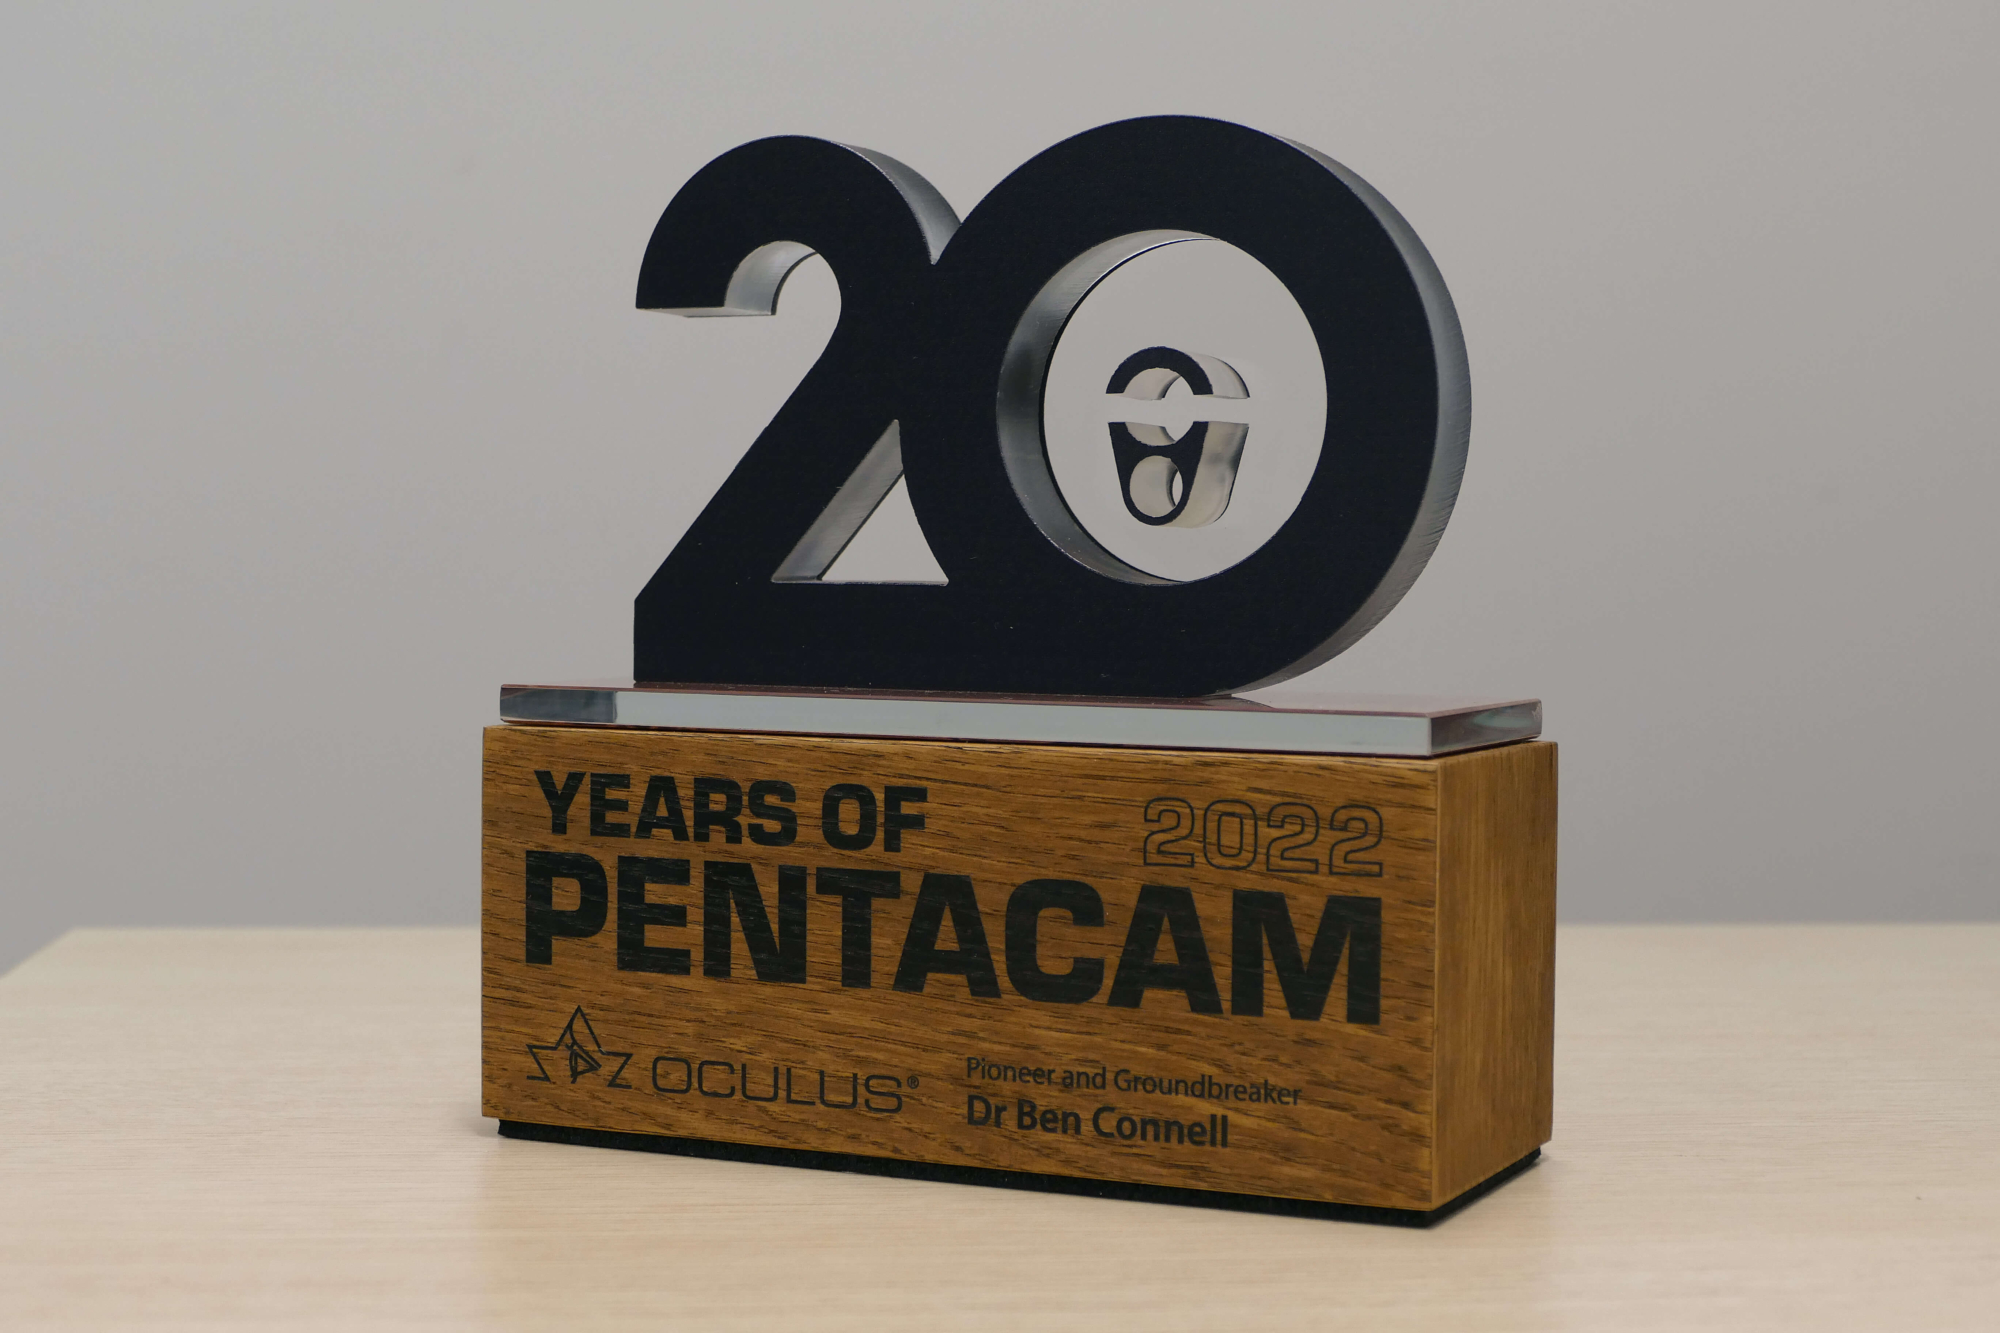 Pentacam® Trophäe zum 20-jährigen Jubiläum für Dr. Ben Connell